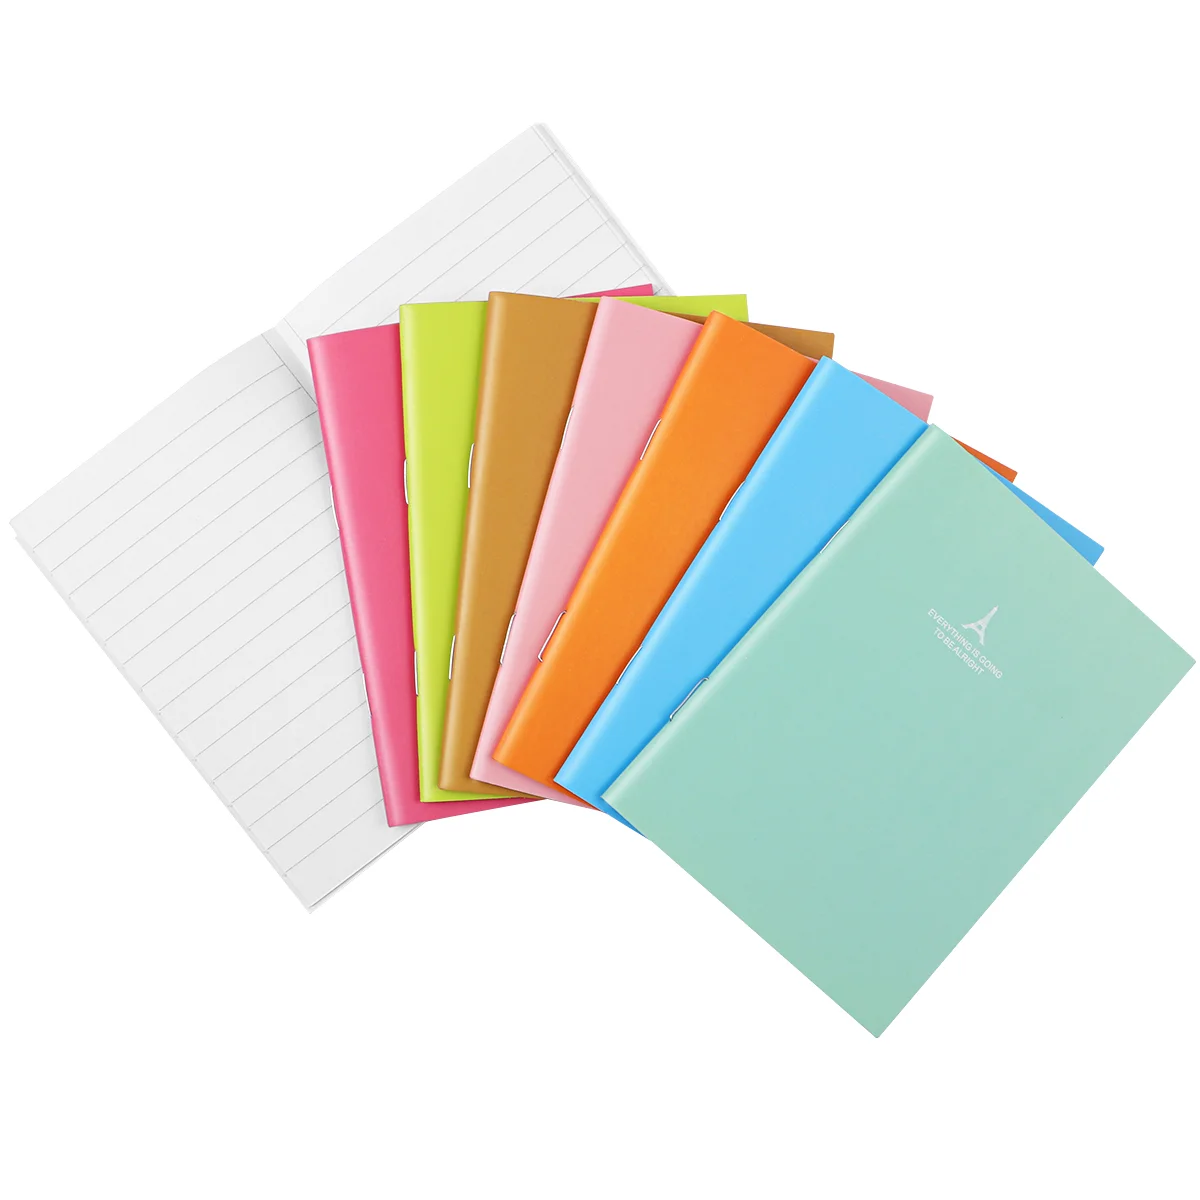 

24PCS Notebook, Candy Colors Portable Travel Set Steno Memo Pad Journals ( 8 Colros, 3pcs/ Color )